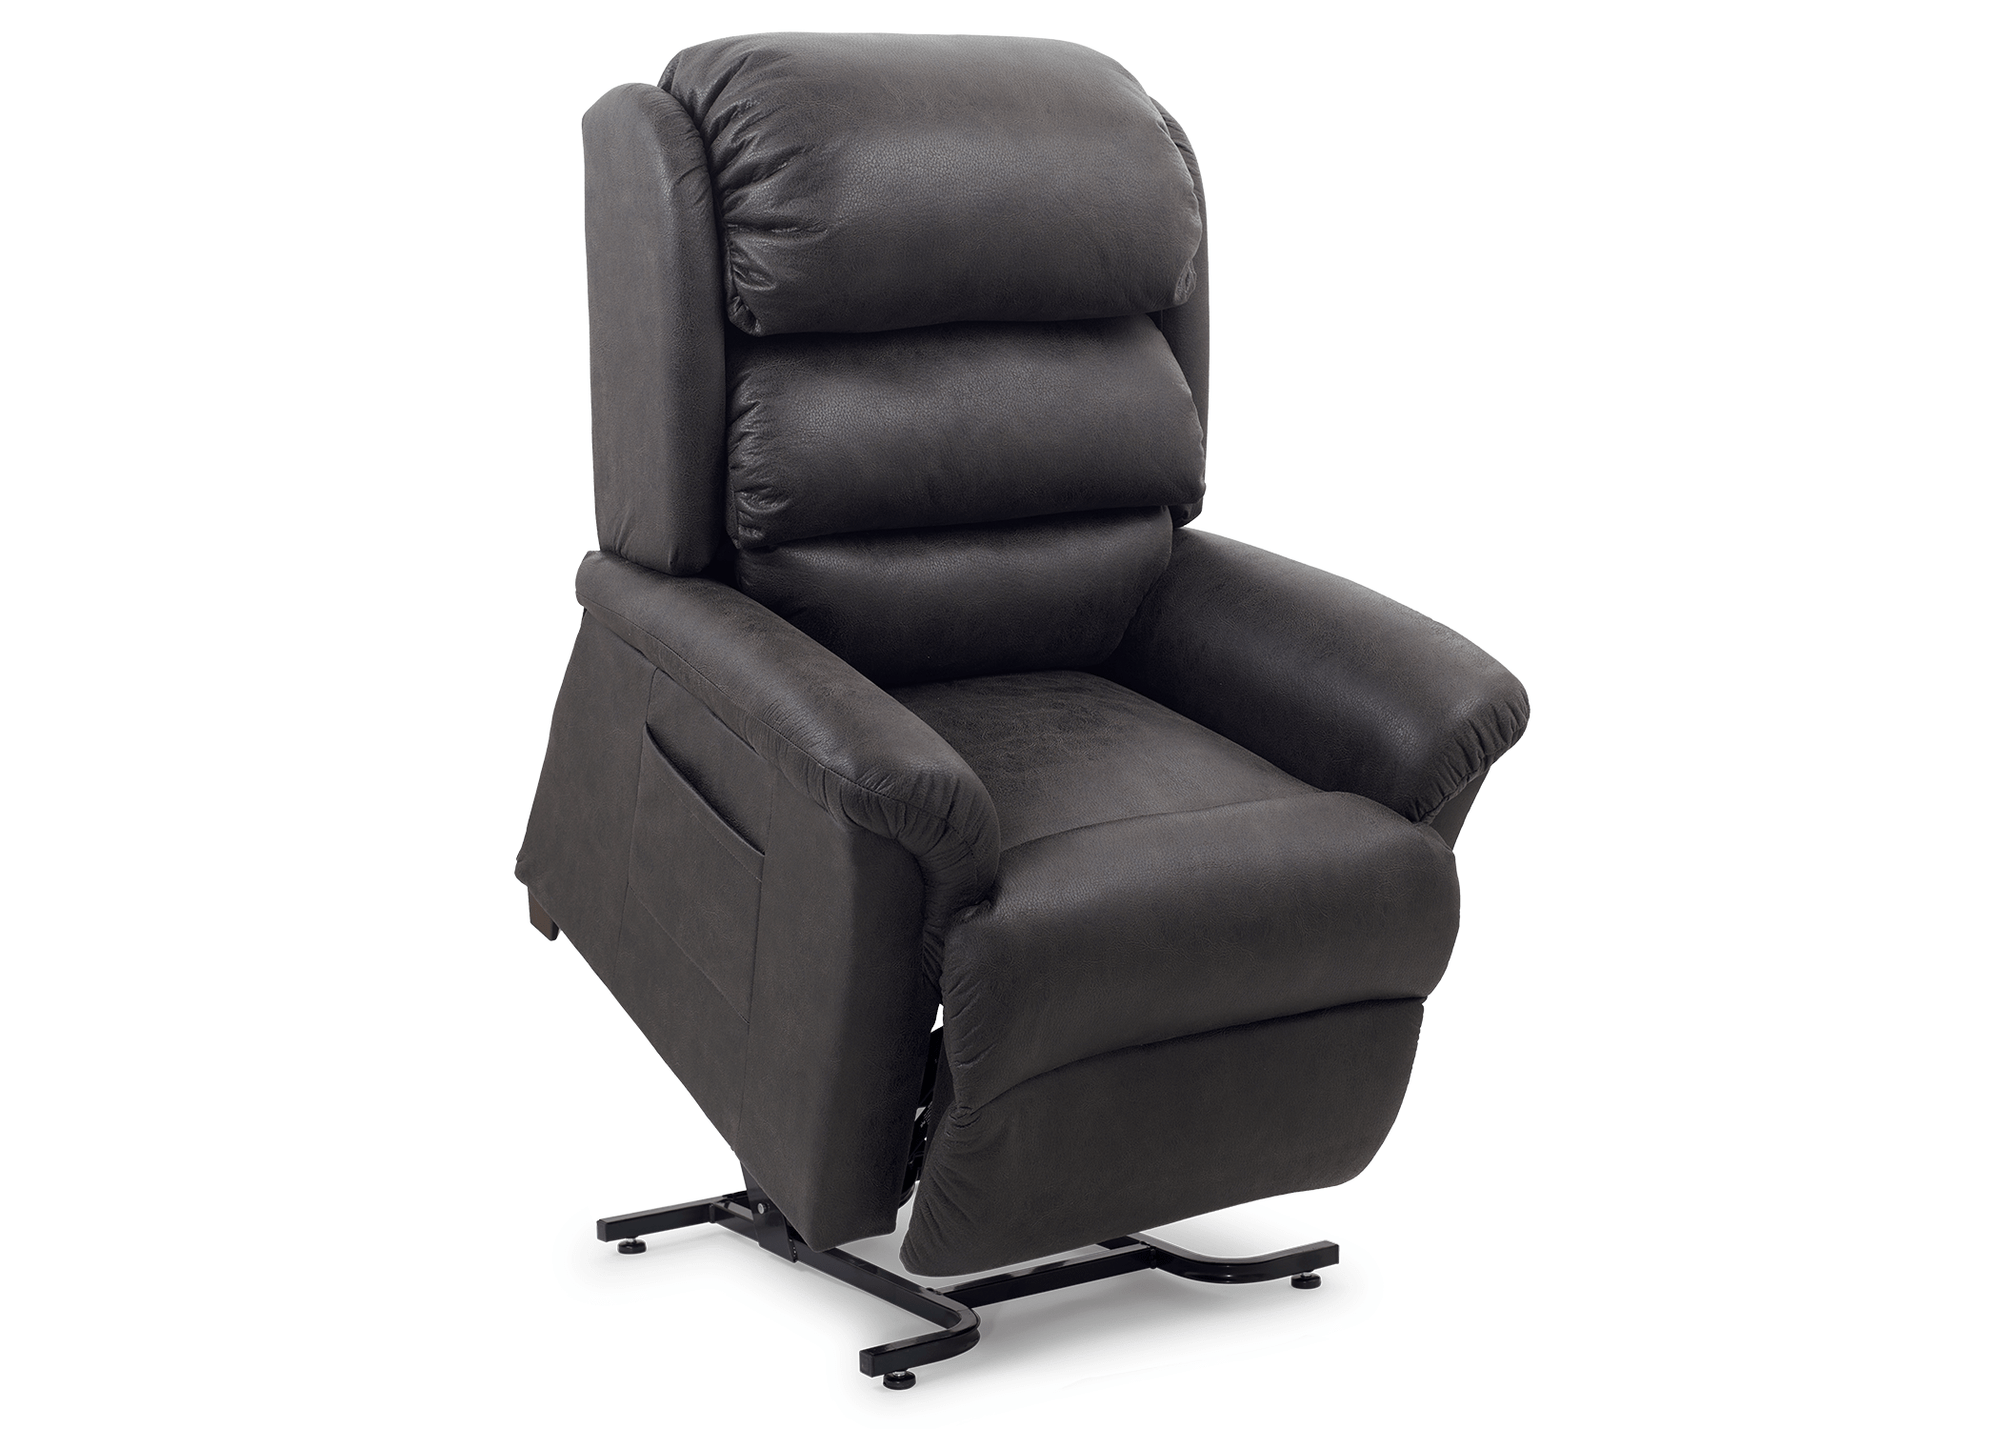 ULTRACOMFORT 3-Position Lift Chair JZ Smoke UltraComfort UC549-M Mira 1 Zone Simple Comfort 3 Position Lift Chair